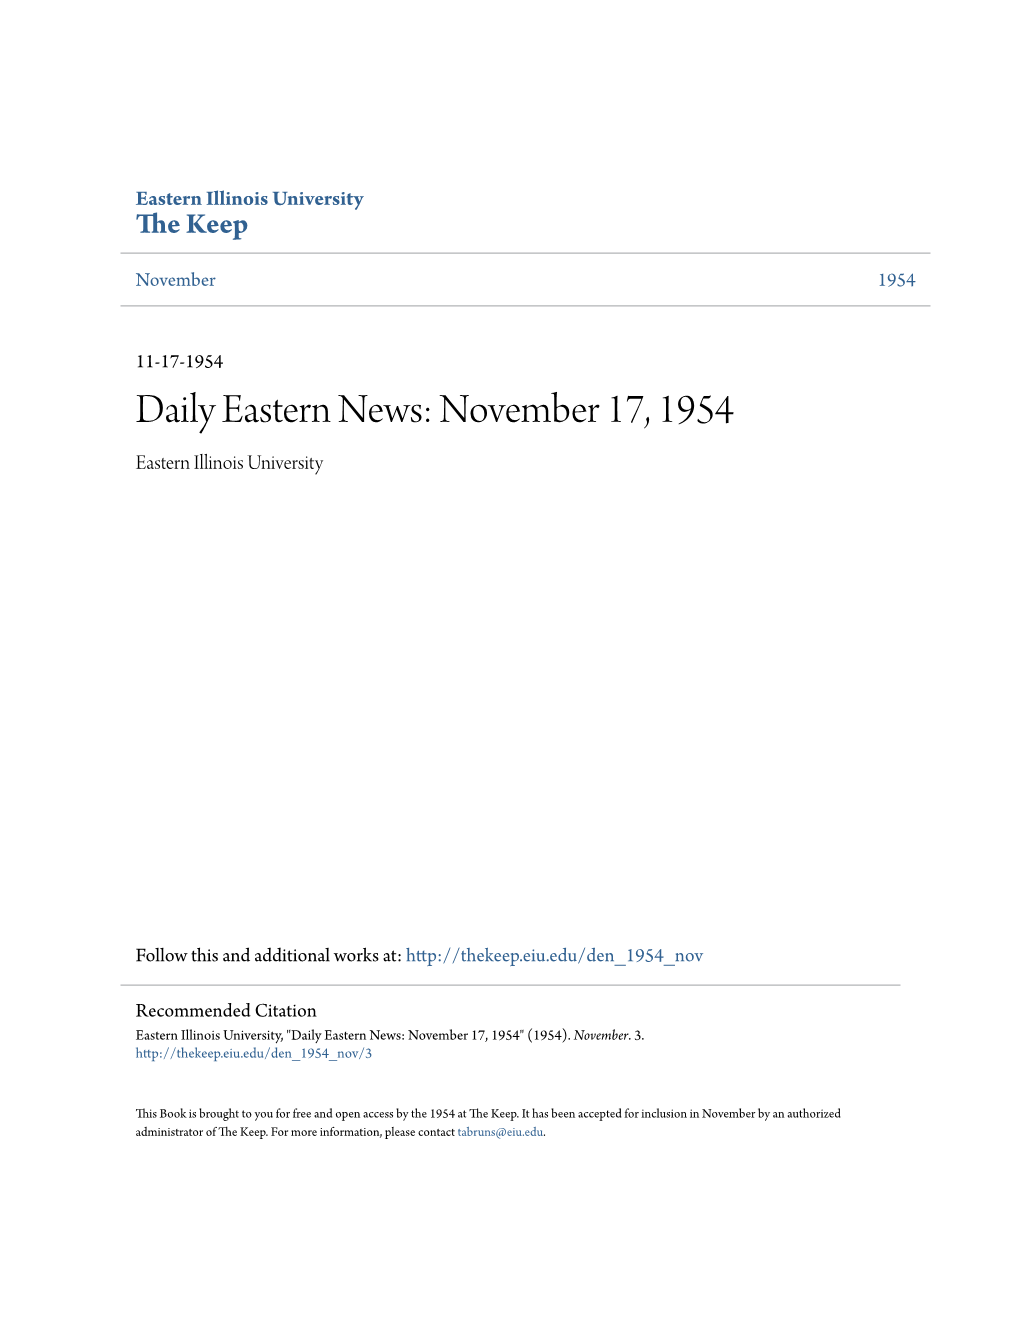 Daily Eastern News: November 17, 1954 Eastern Illinois University